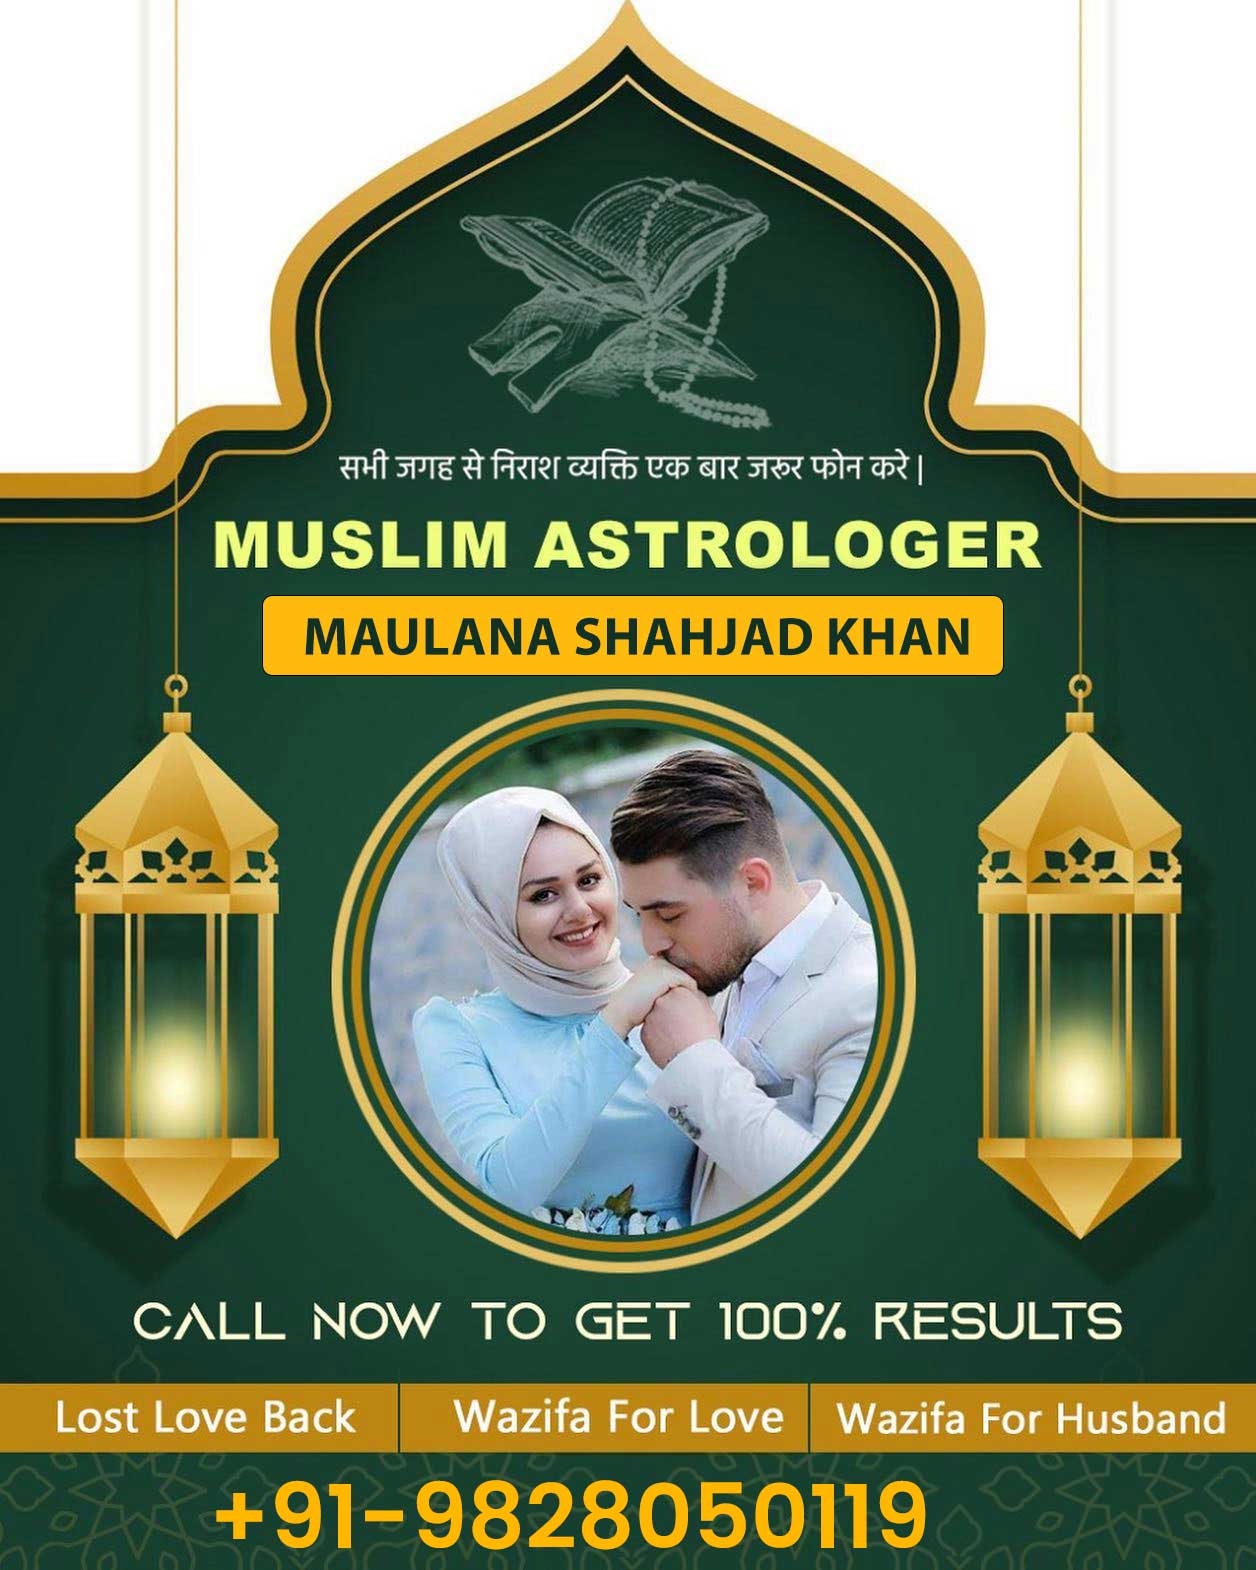 Astrology Specialist in Jaipur